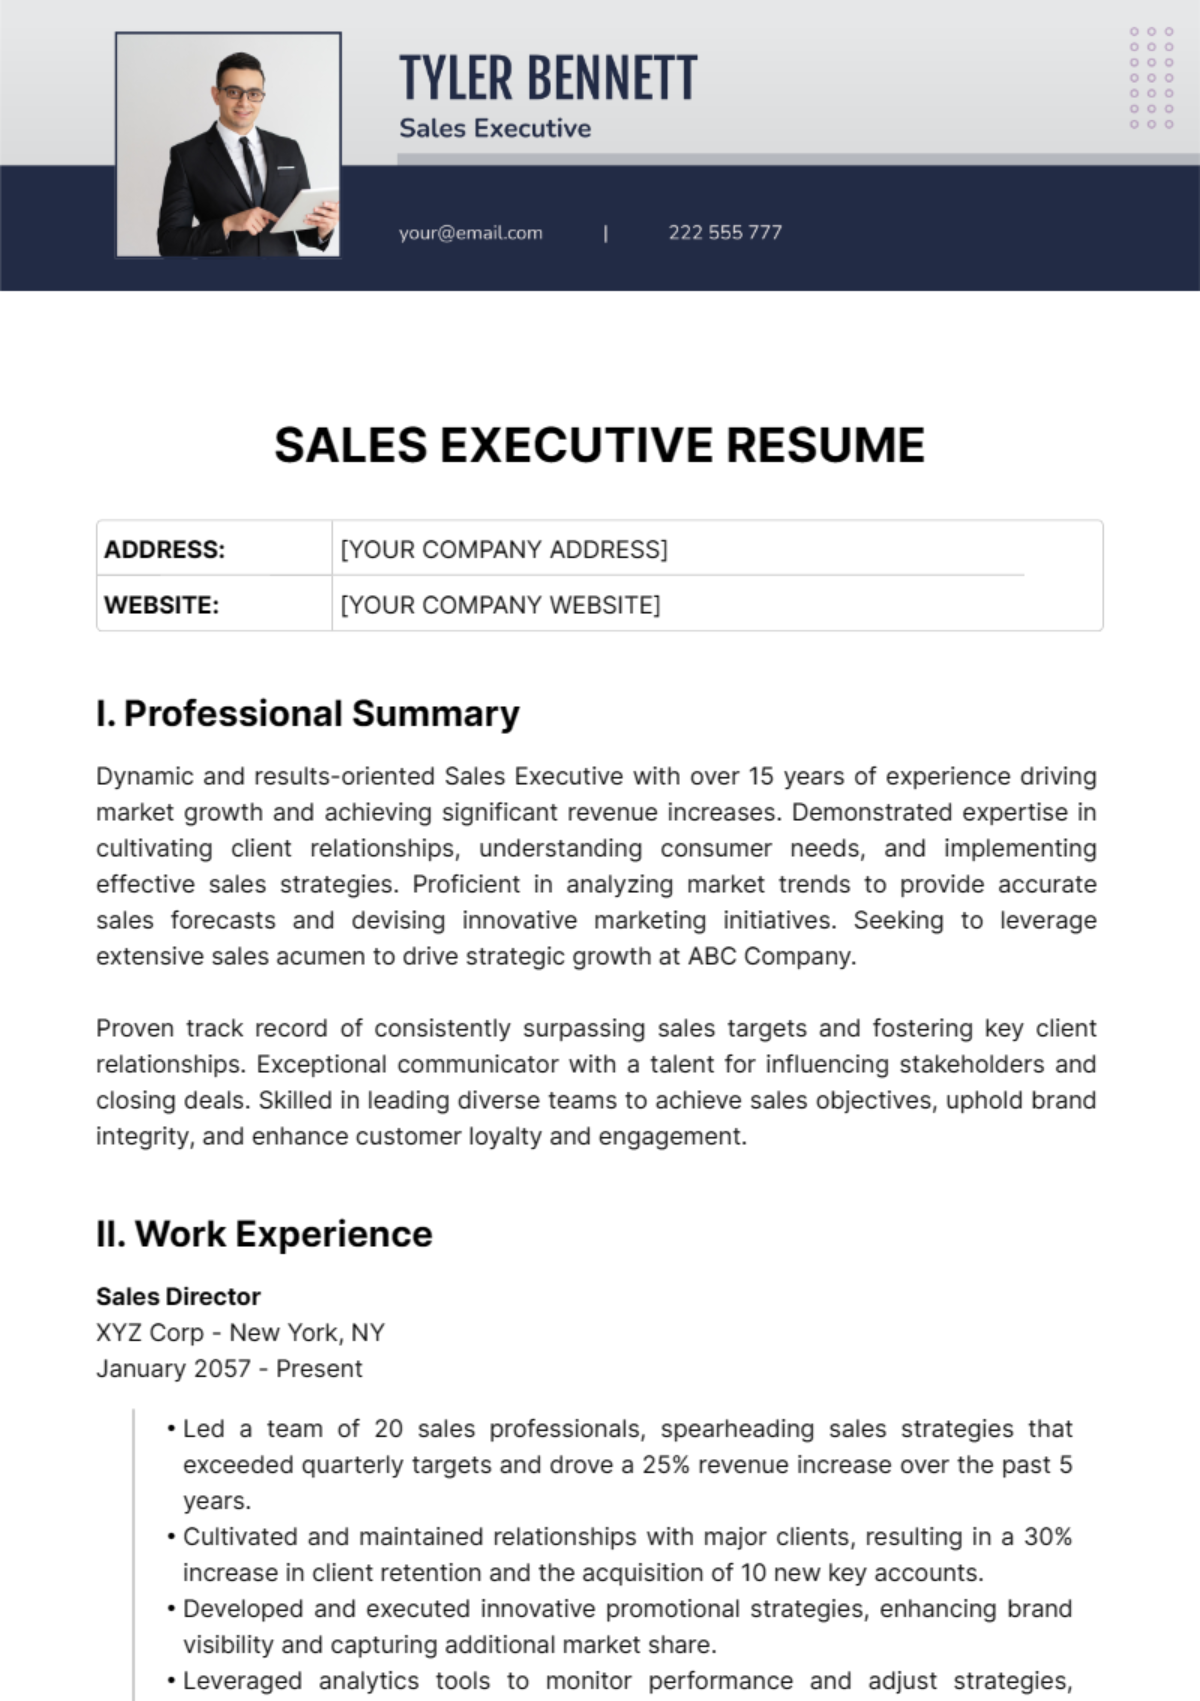 Sales Executive Resume Template